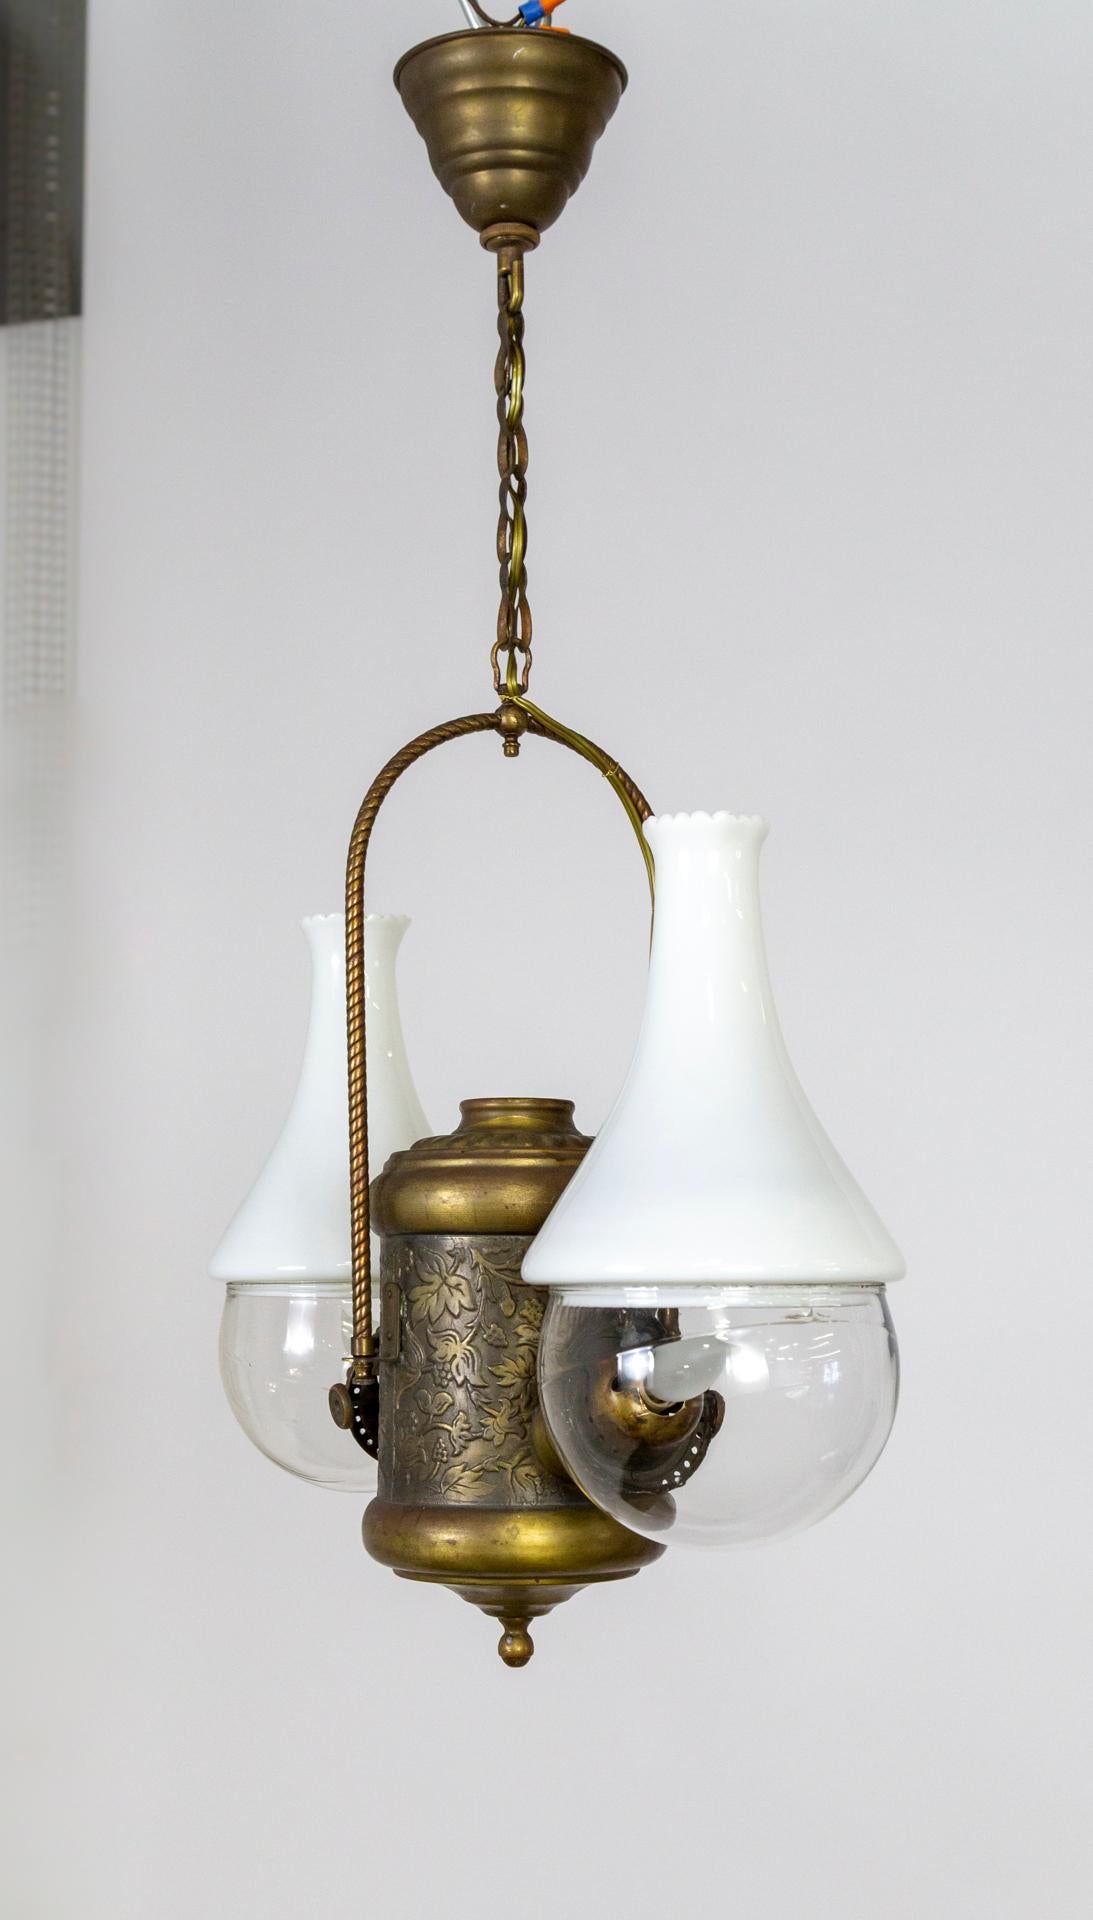 Late Victorian Angle Lamp Co. Electrified Kerosene Brass & Glass 2-Light Hanging Fixture